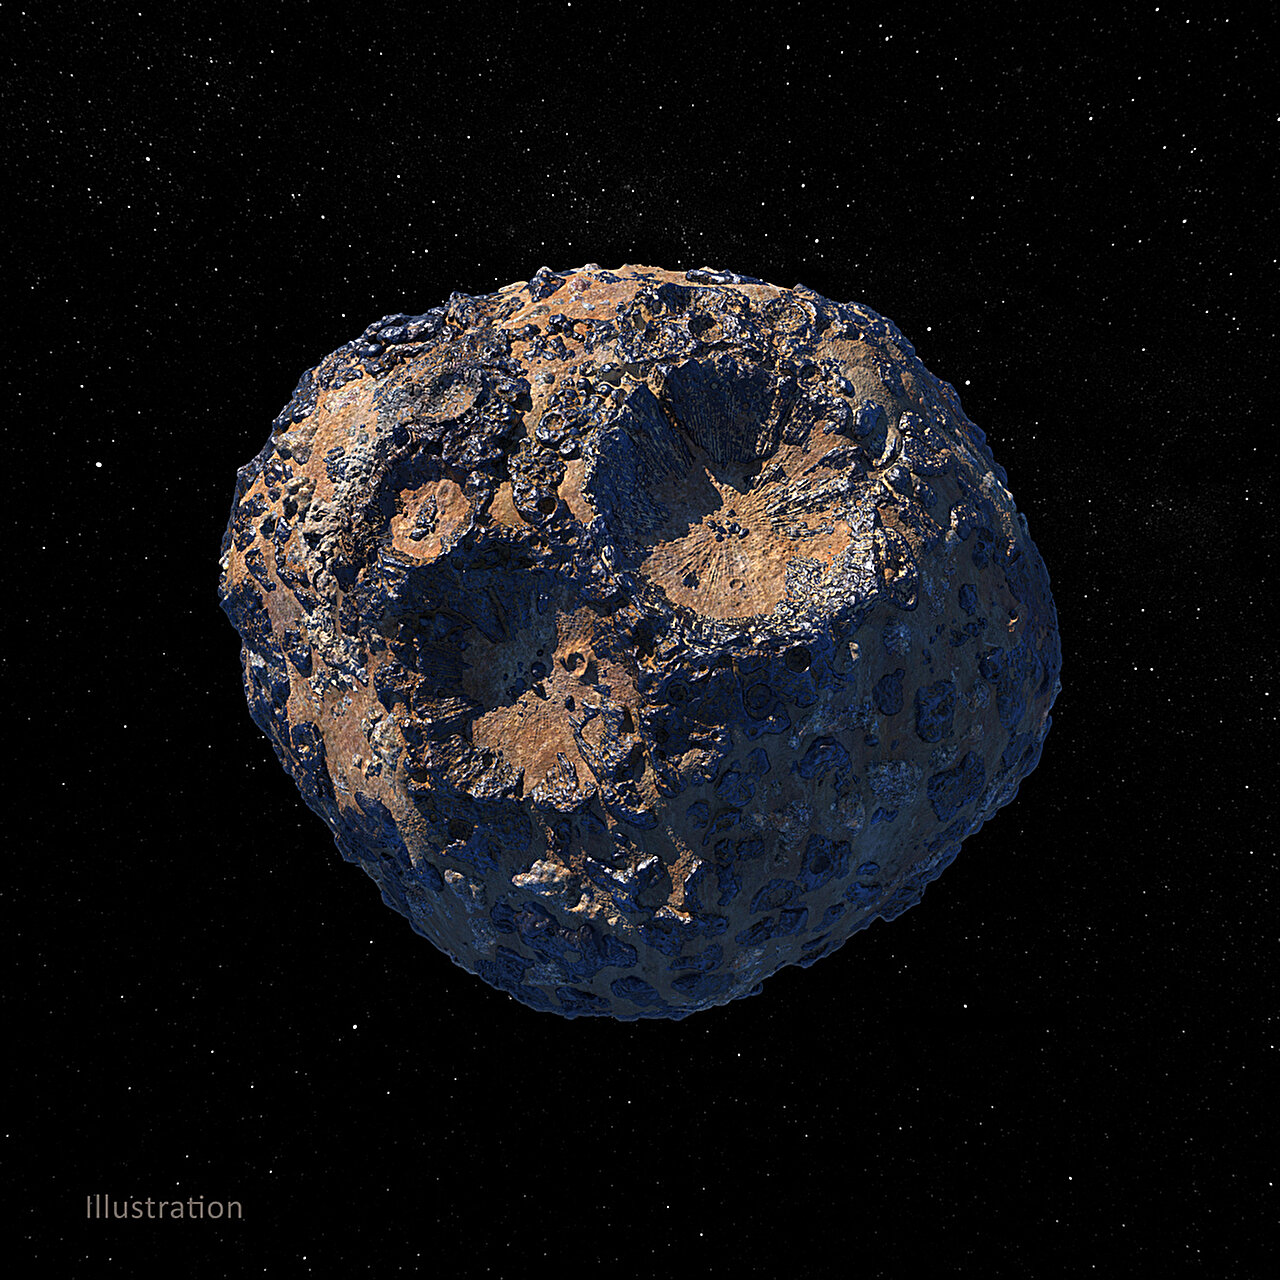 Scientists use Webb, SOFIA telescopes to observe metallic asteroid